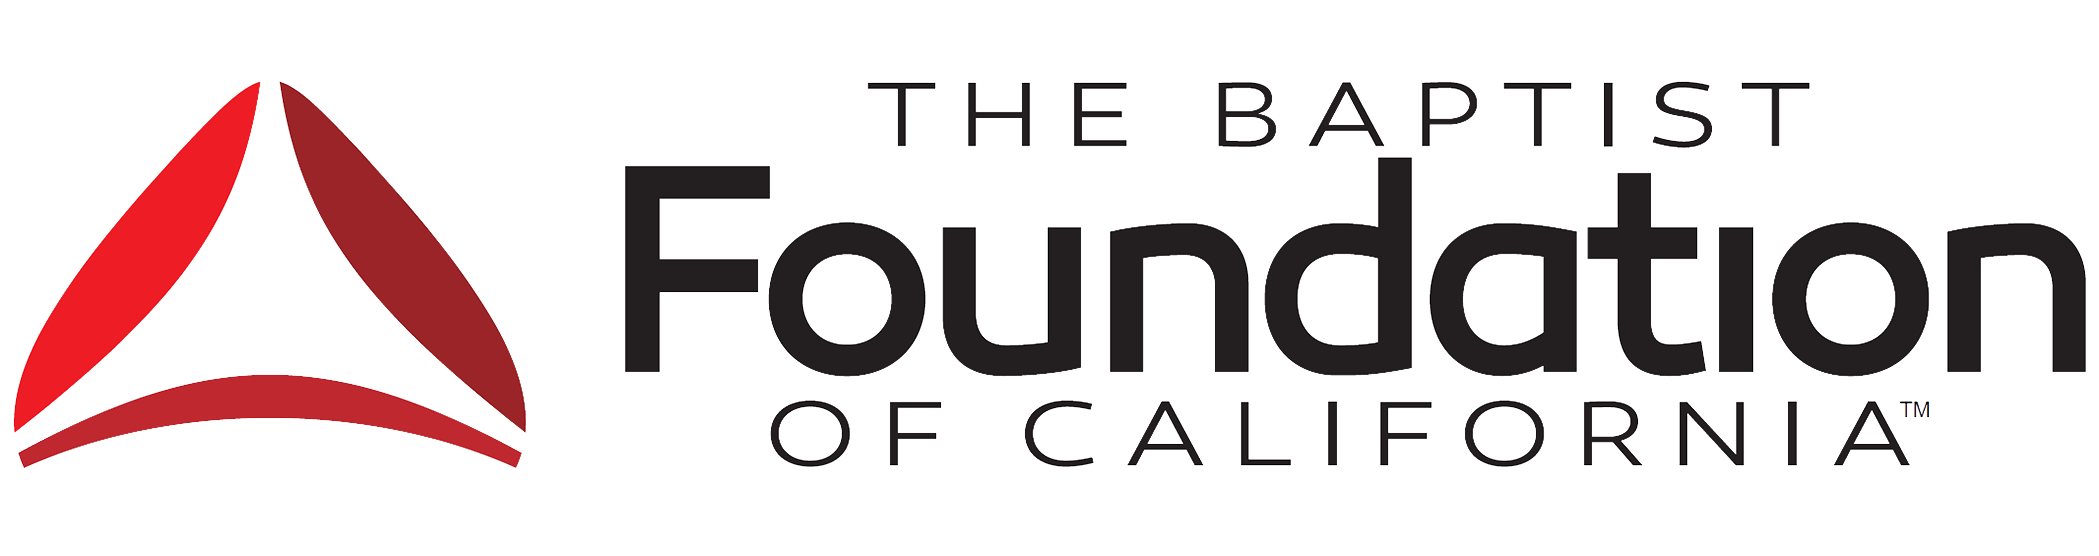 The Baptist Foundation of California